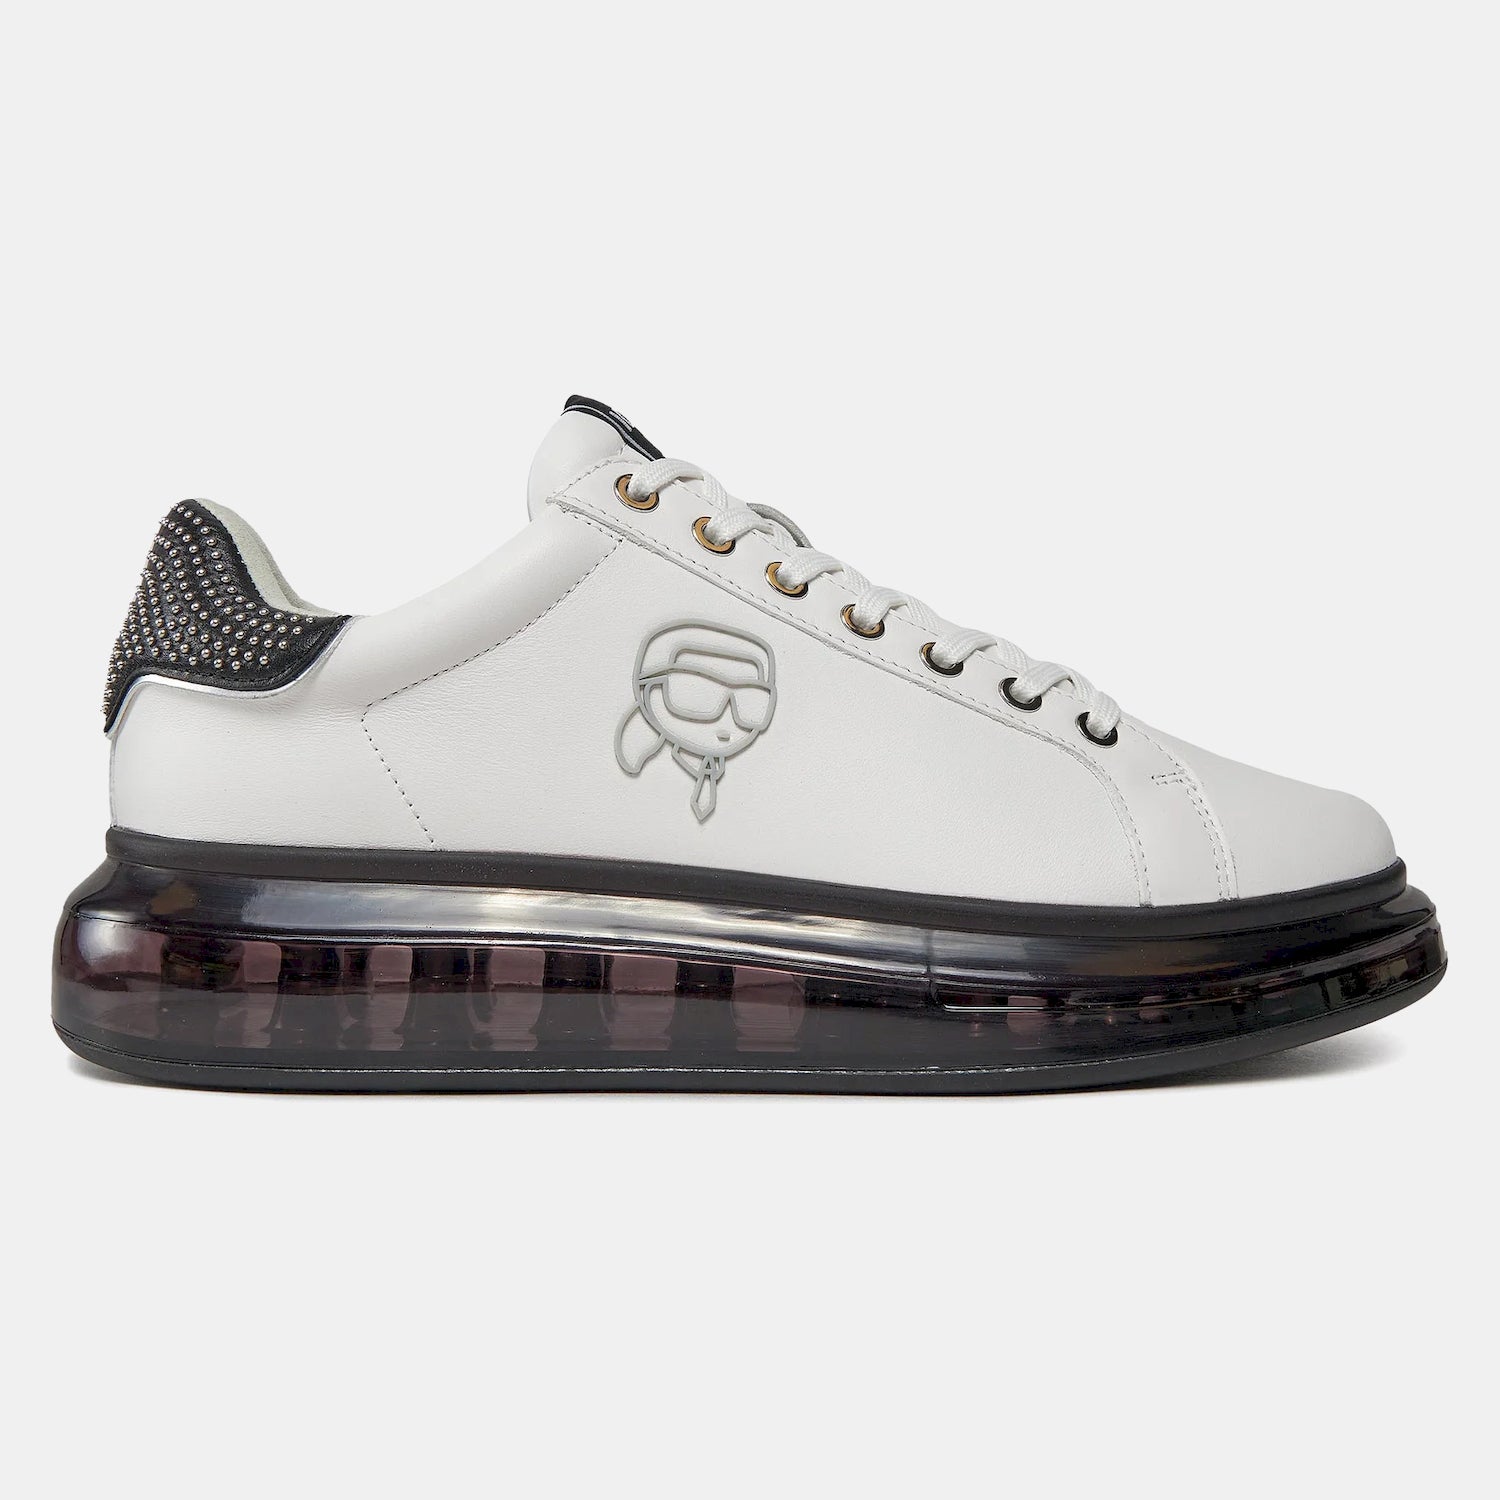 Karl Lagerfeld Sapatilhas Sneakers Shoes Kl52631n Whi Black Branco Preto_shot1